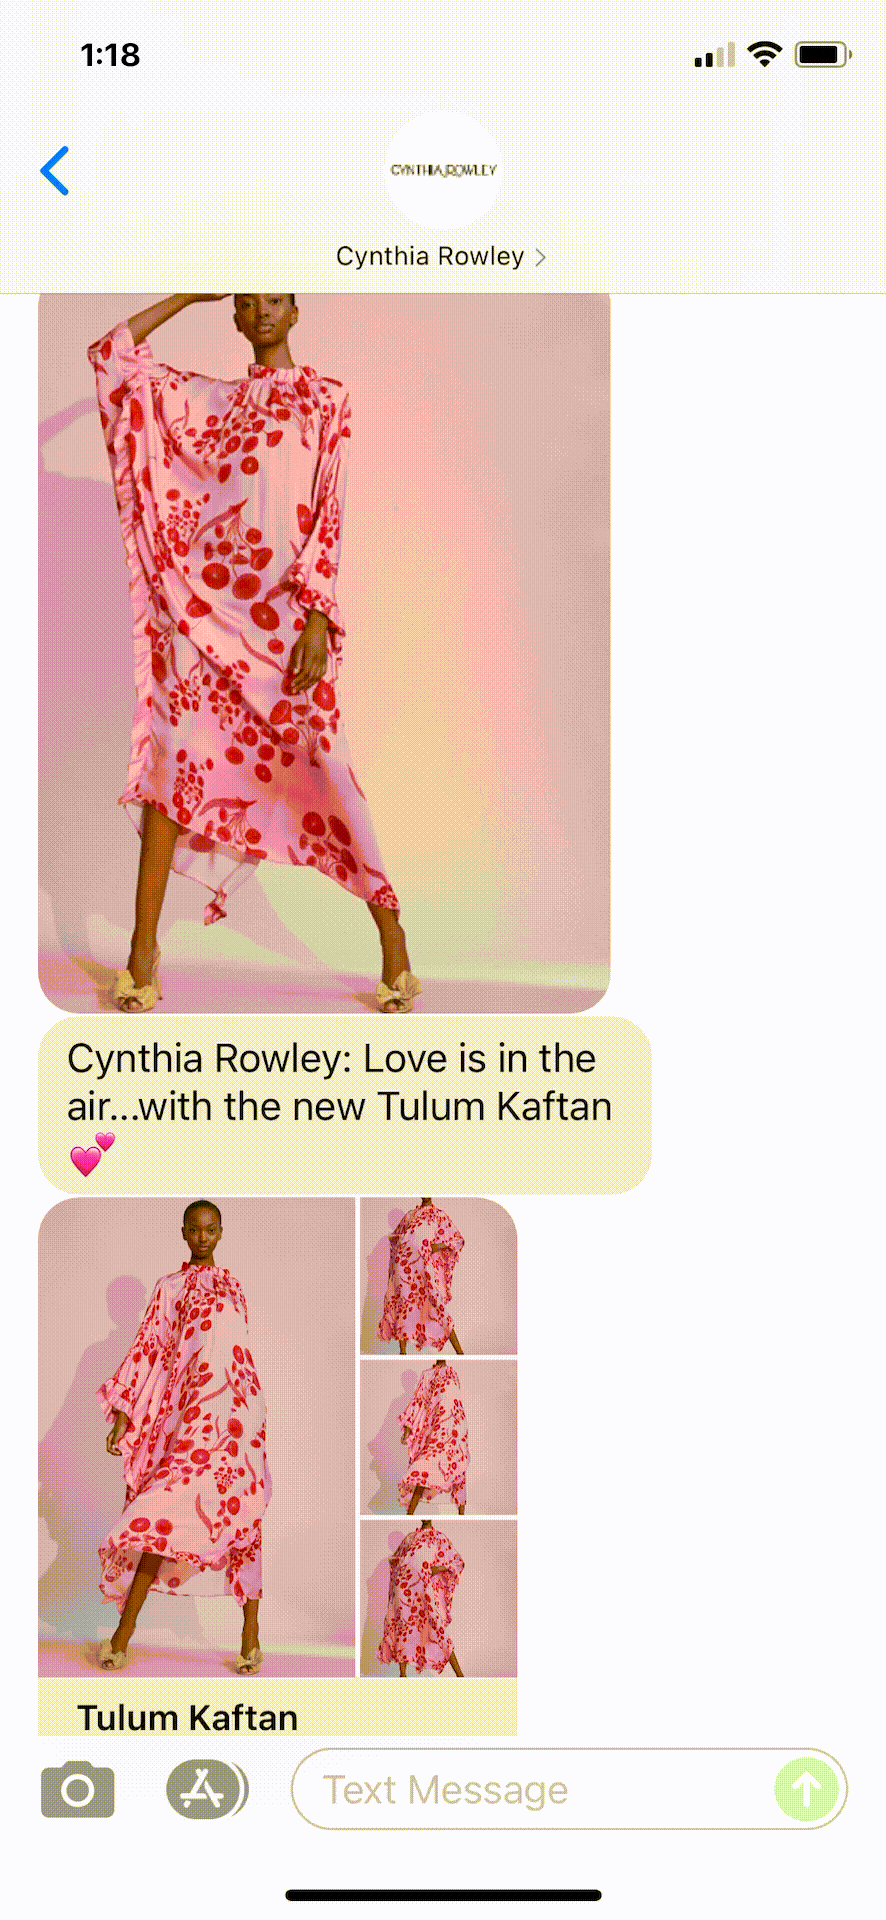 Cynthia-Rowley-Text-Message-Marketing-Example-08.13.2021